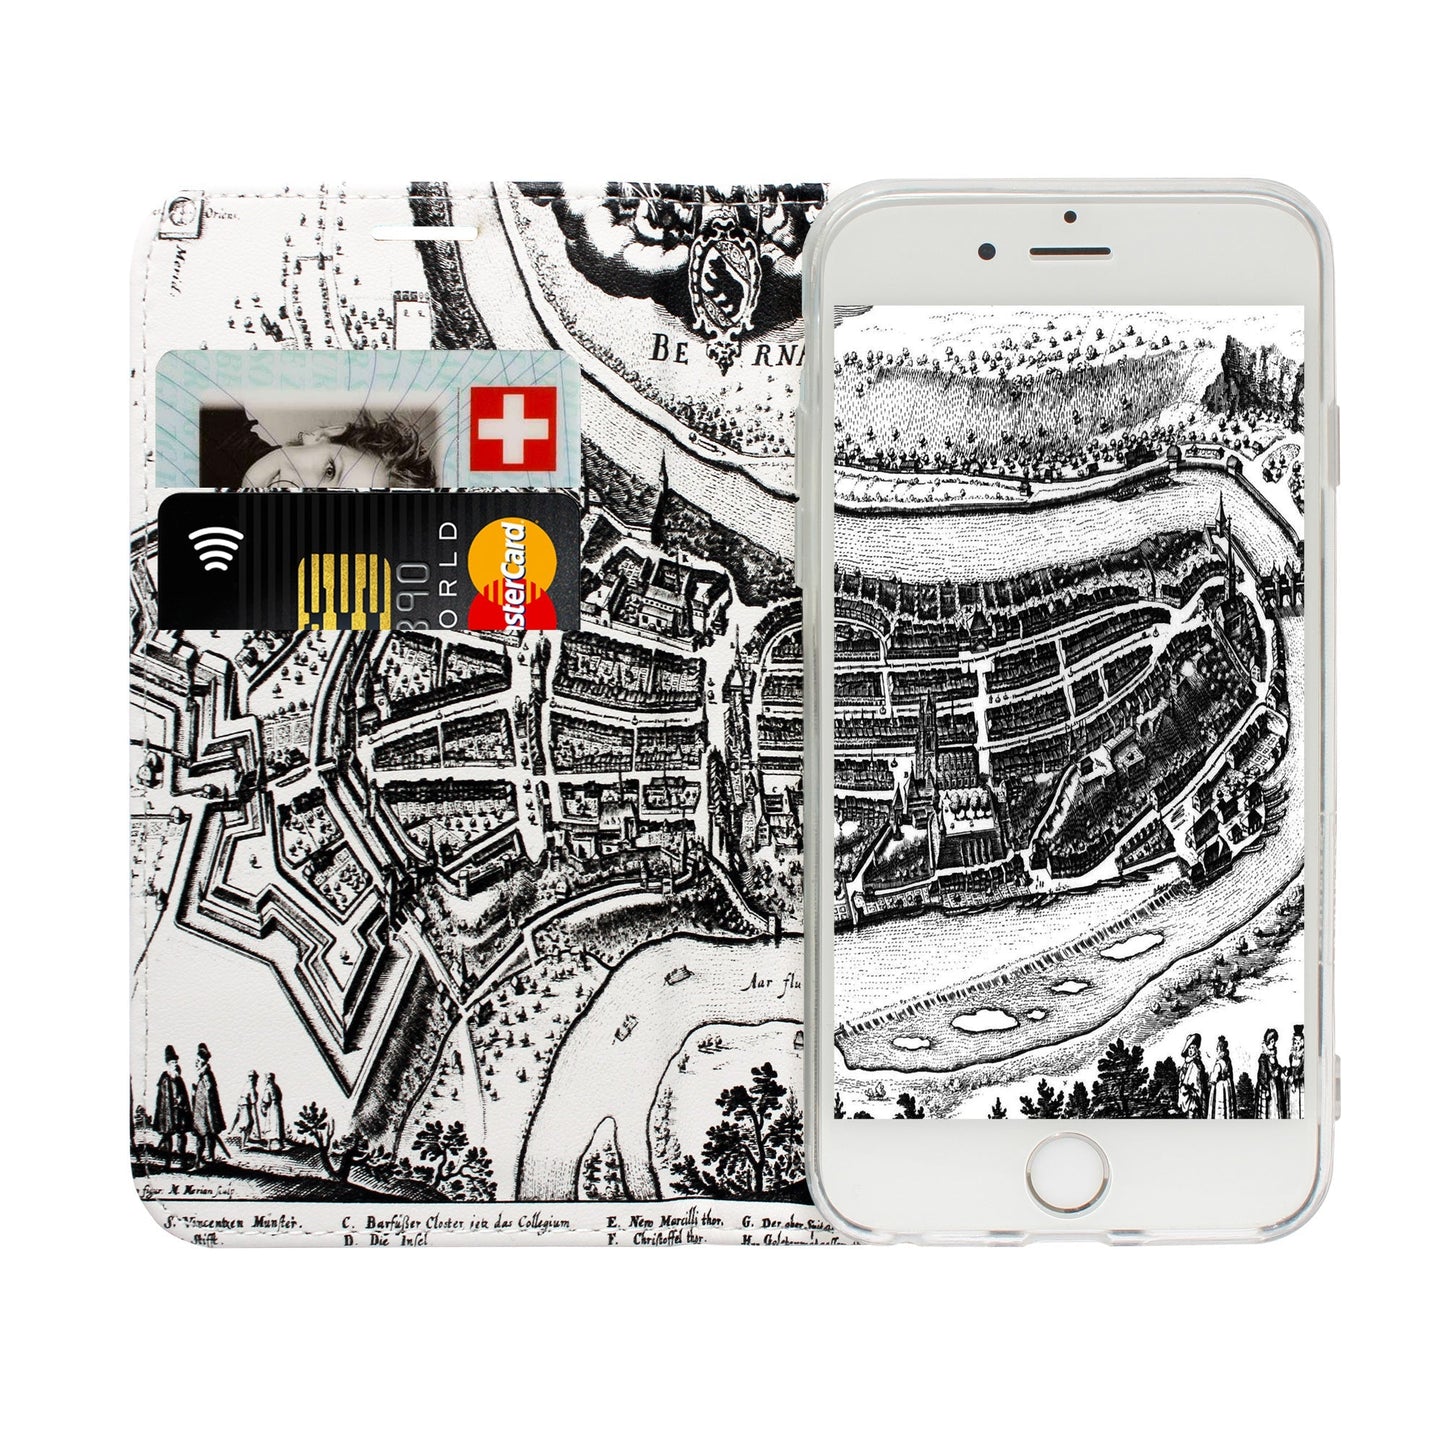 Bern City Panorama Case für iPhone 5/5S/SE 1